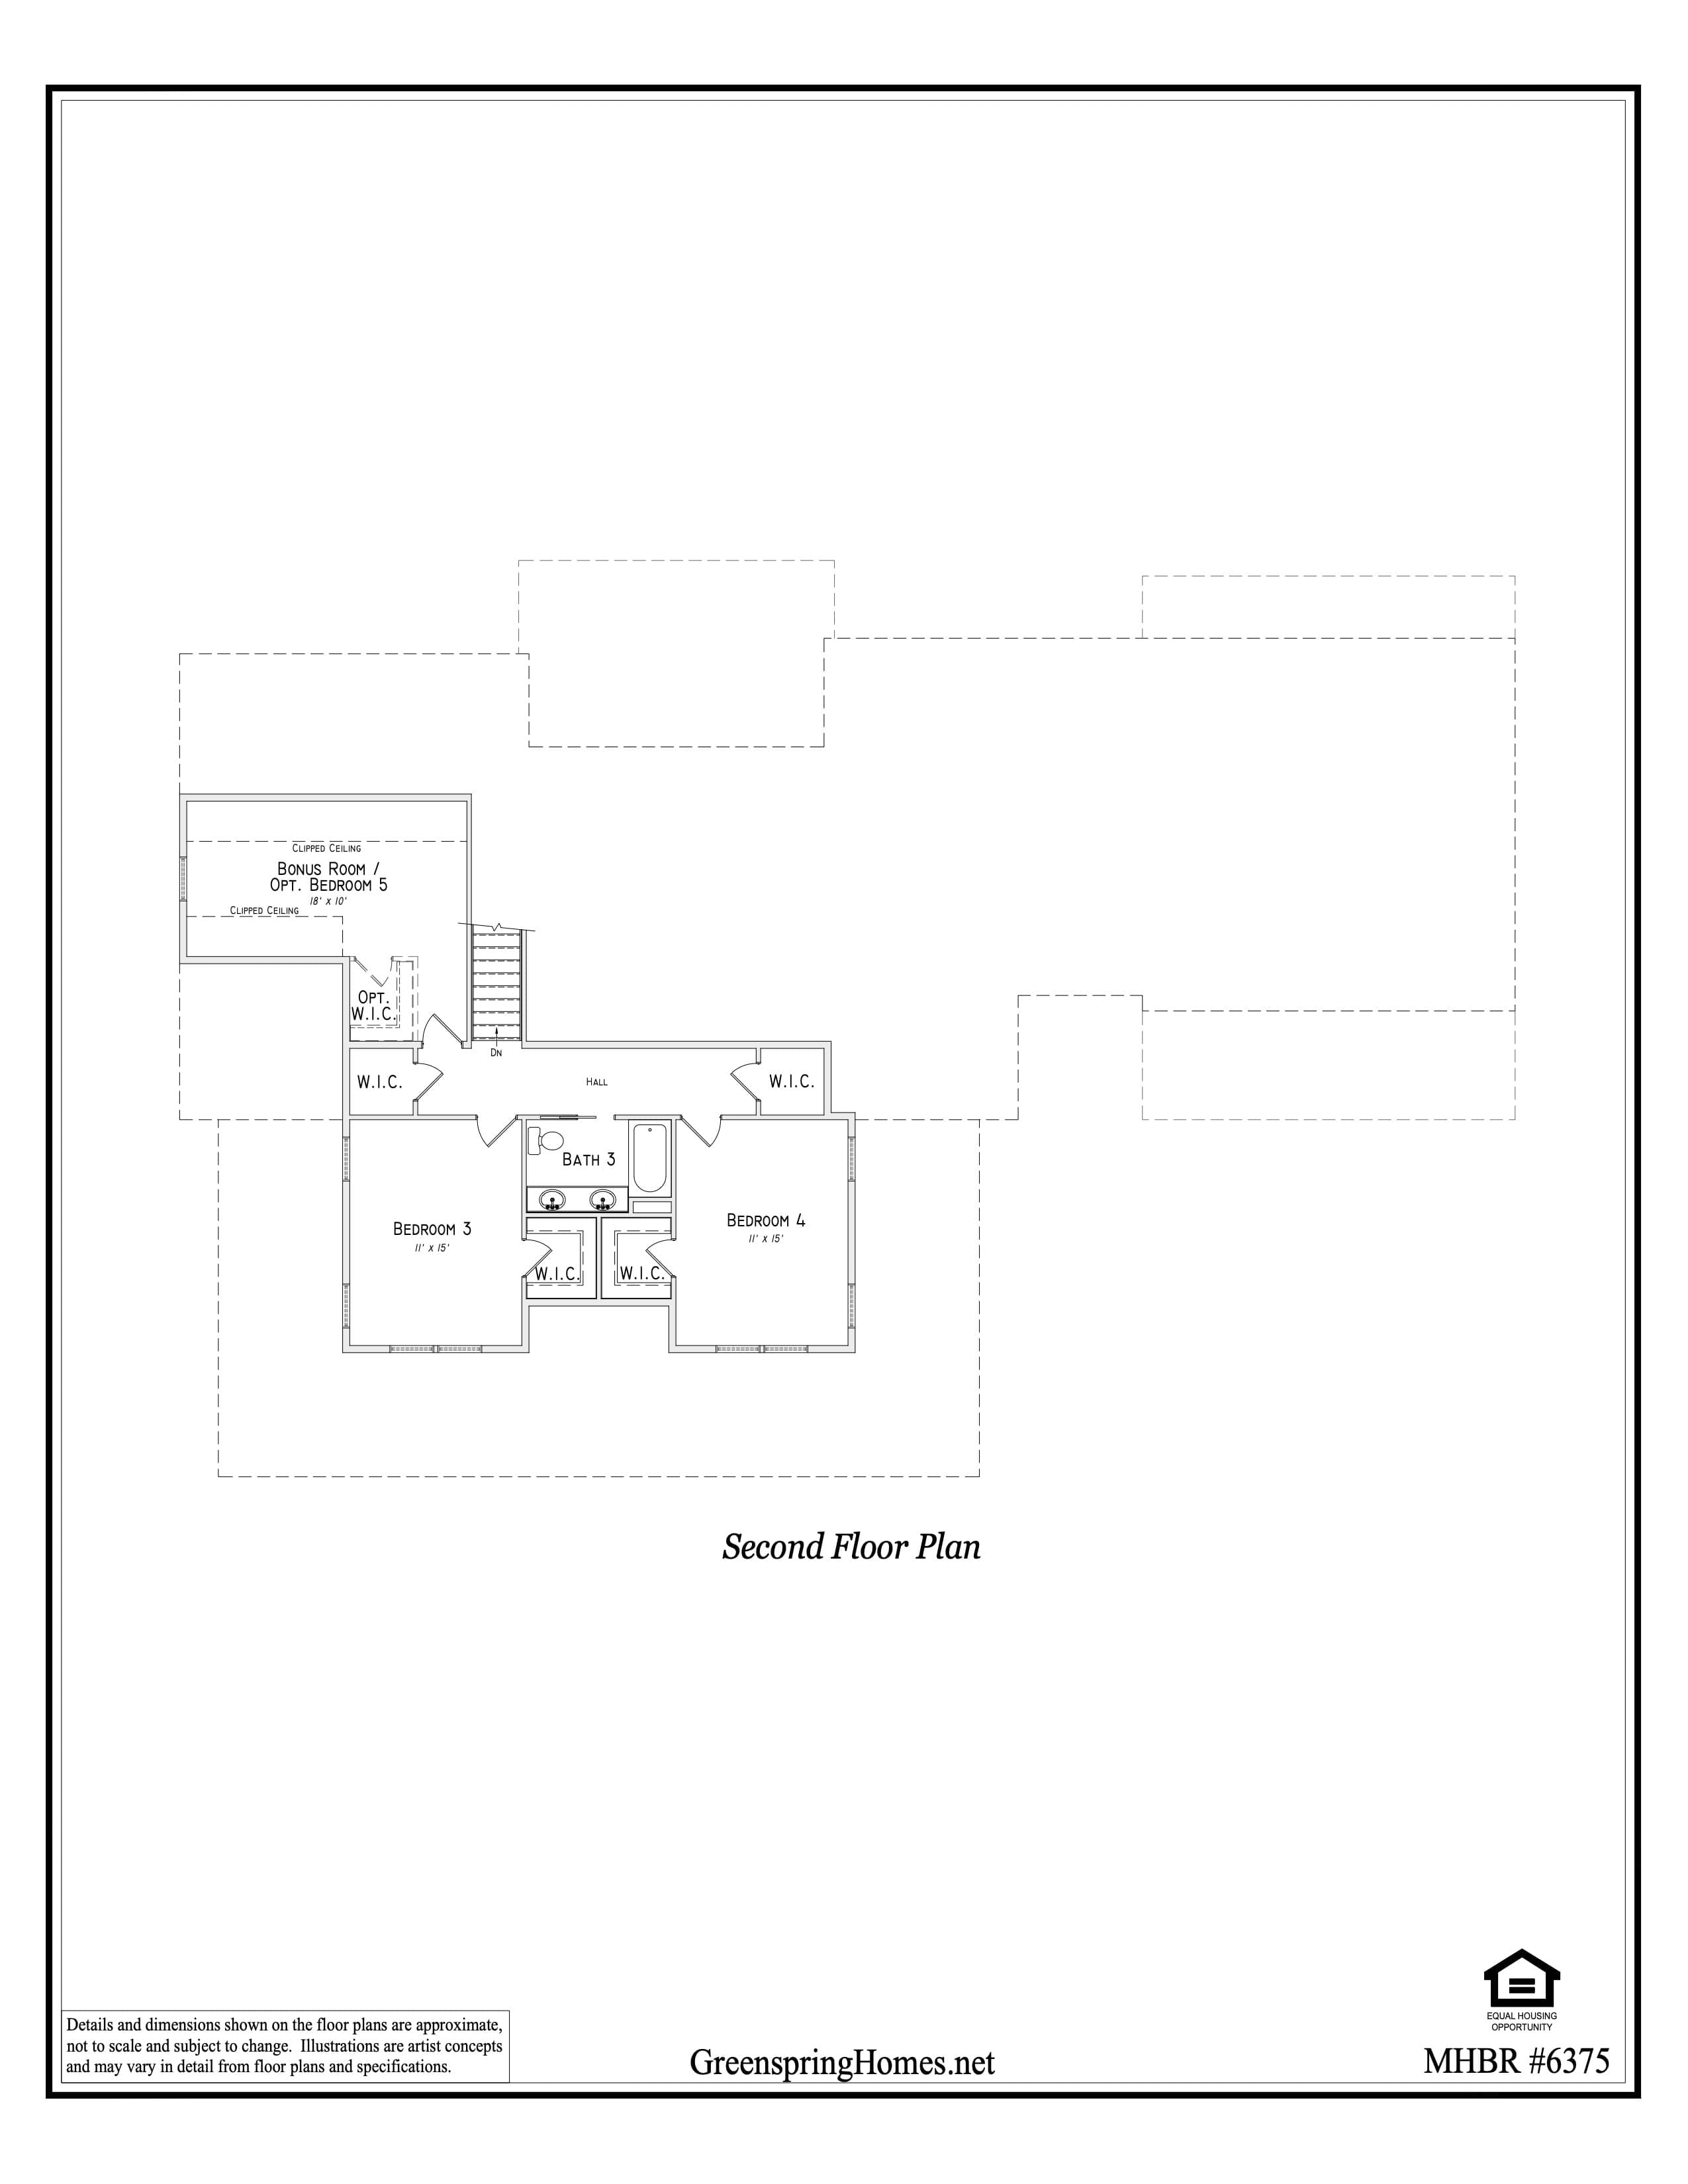 The Georgia Farmhouse Second Floor Plan